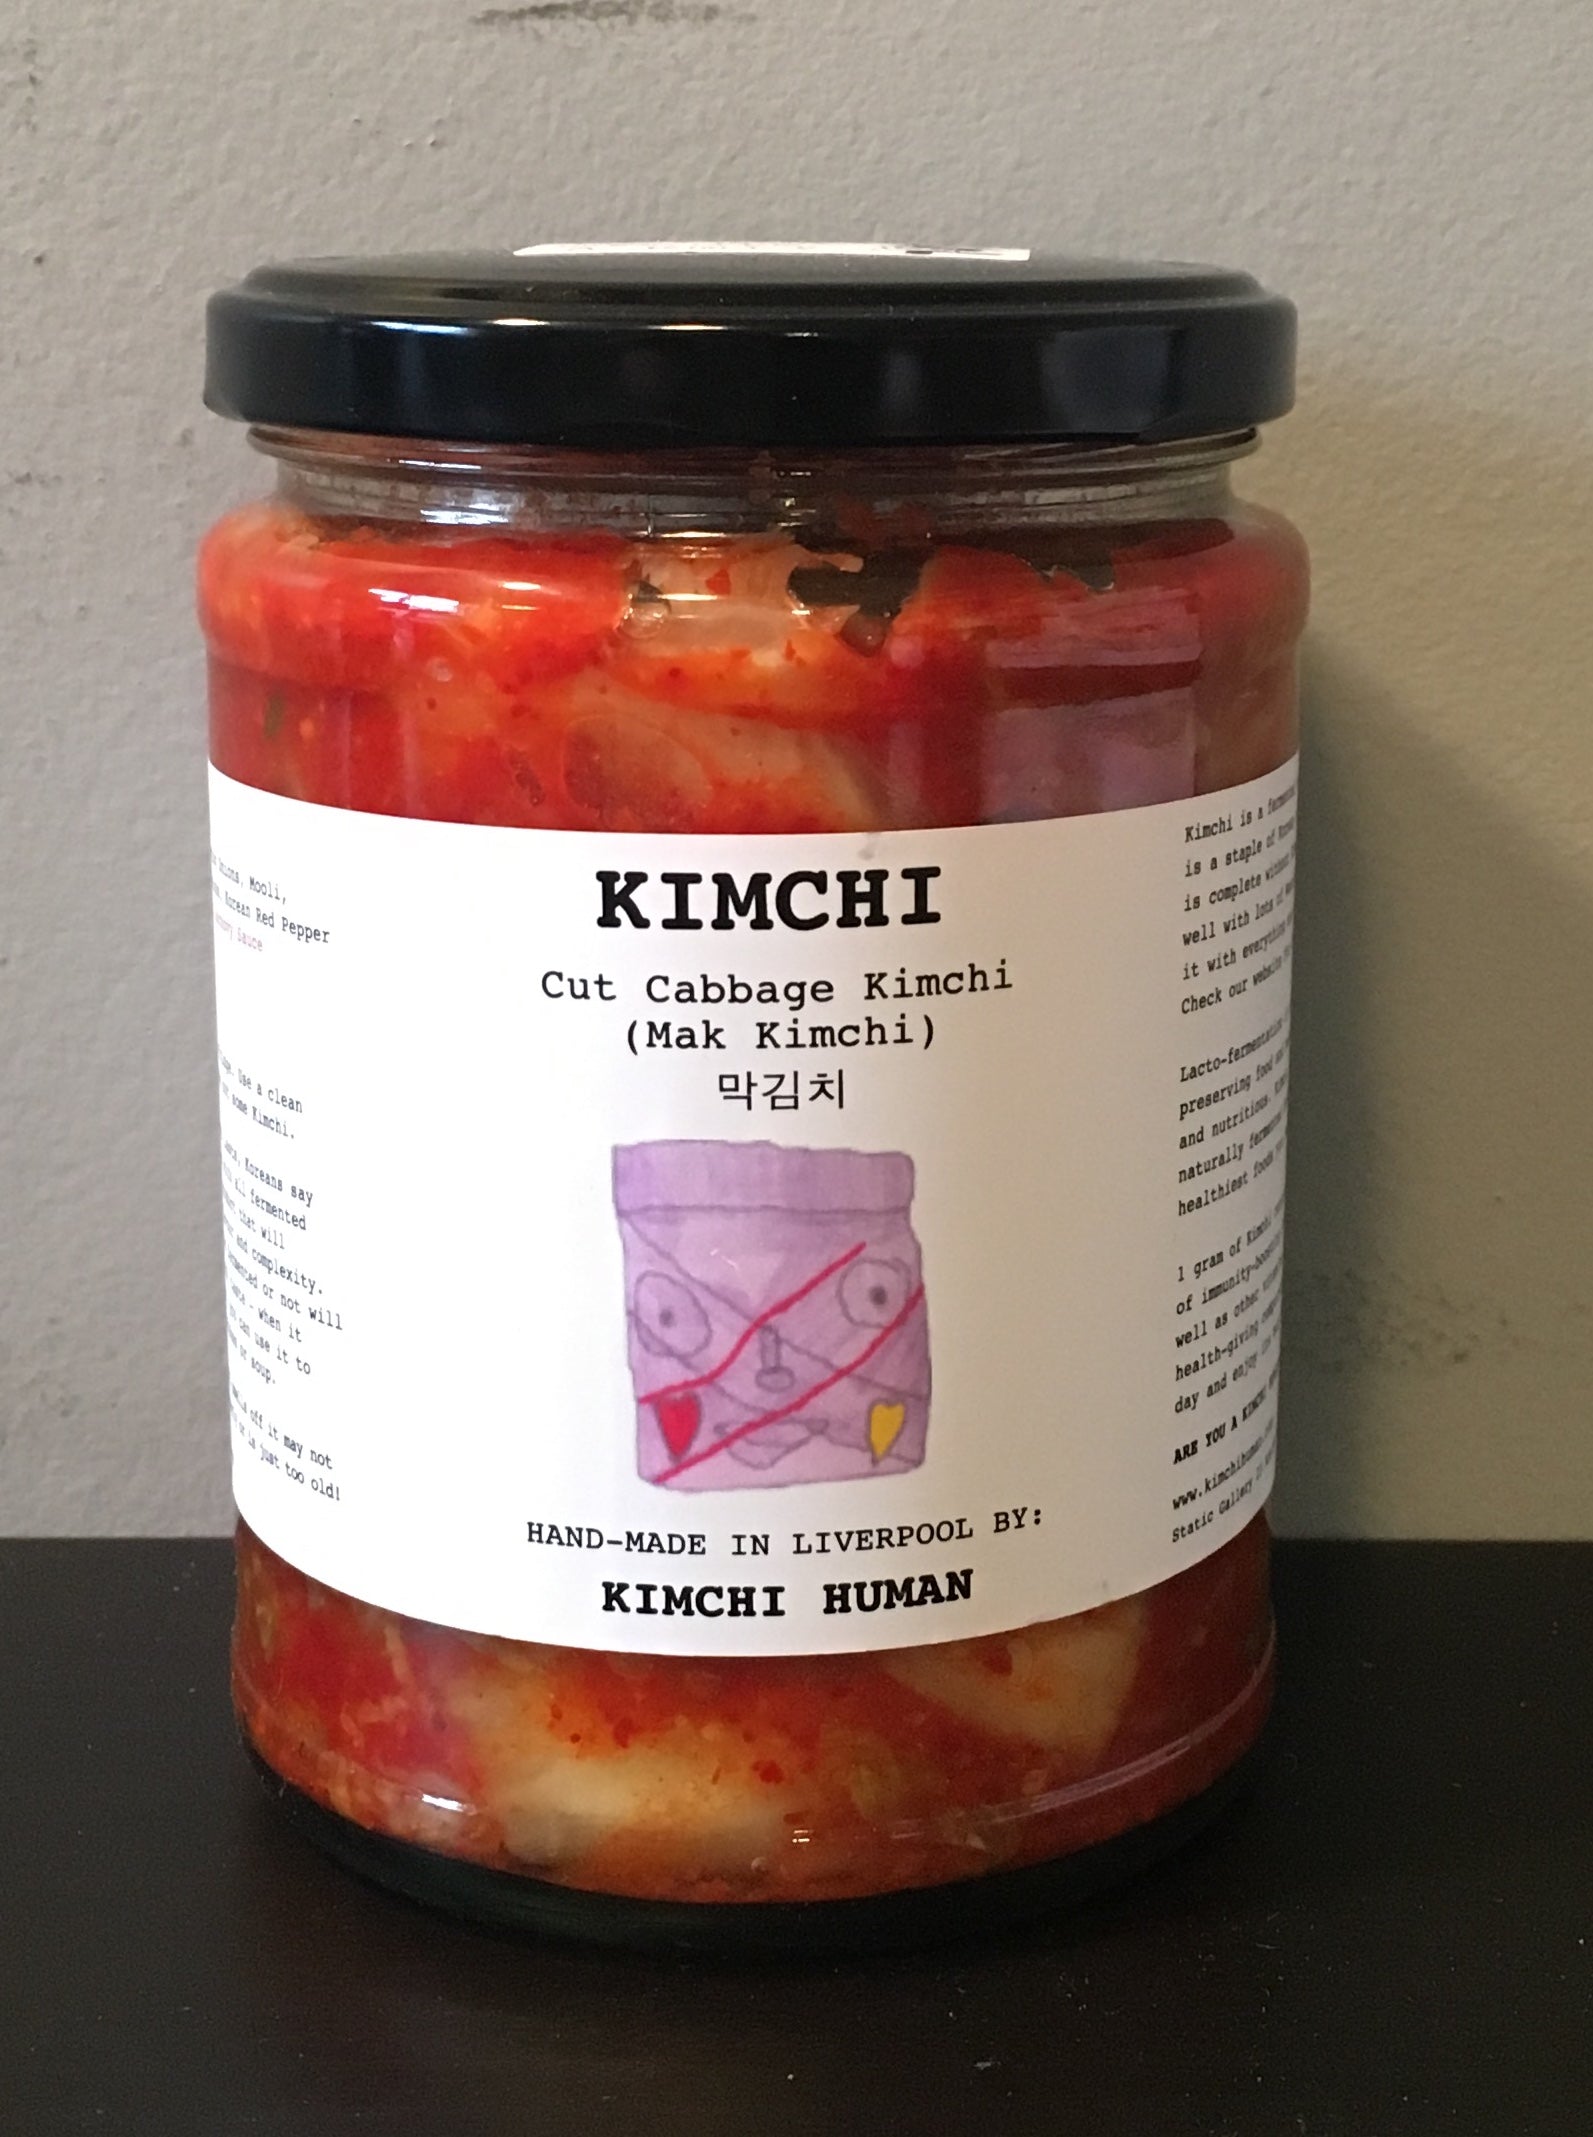 Mak Kimchi - Cut Cabbage Kimchi with Fish Sauce - 470g approx